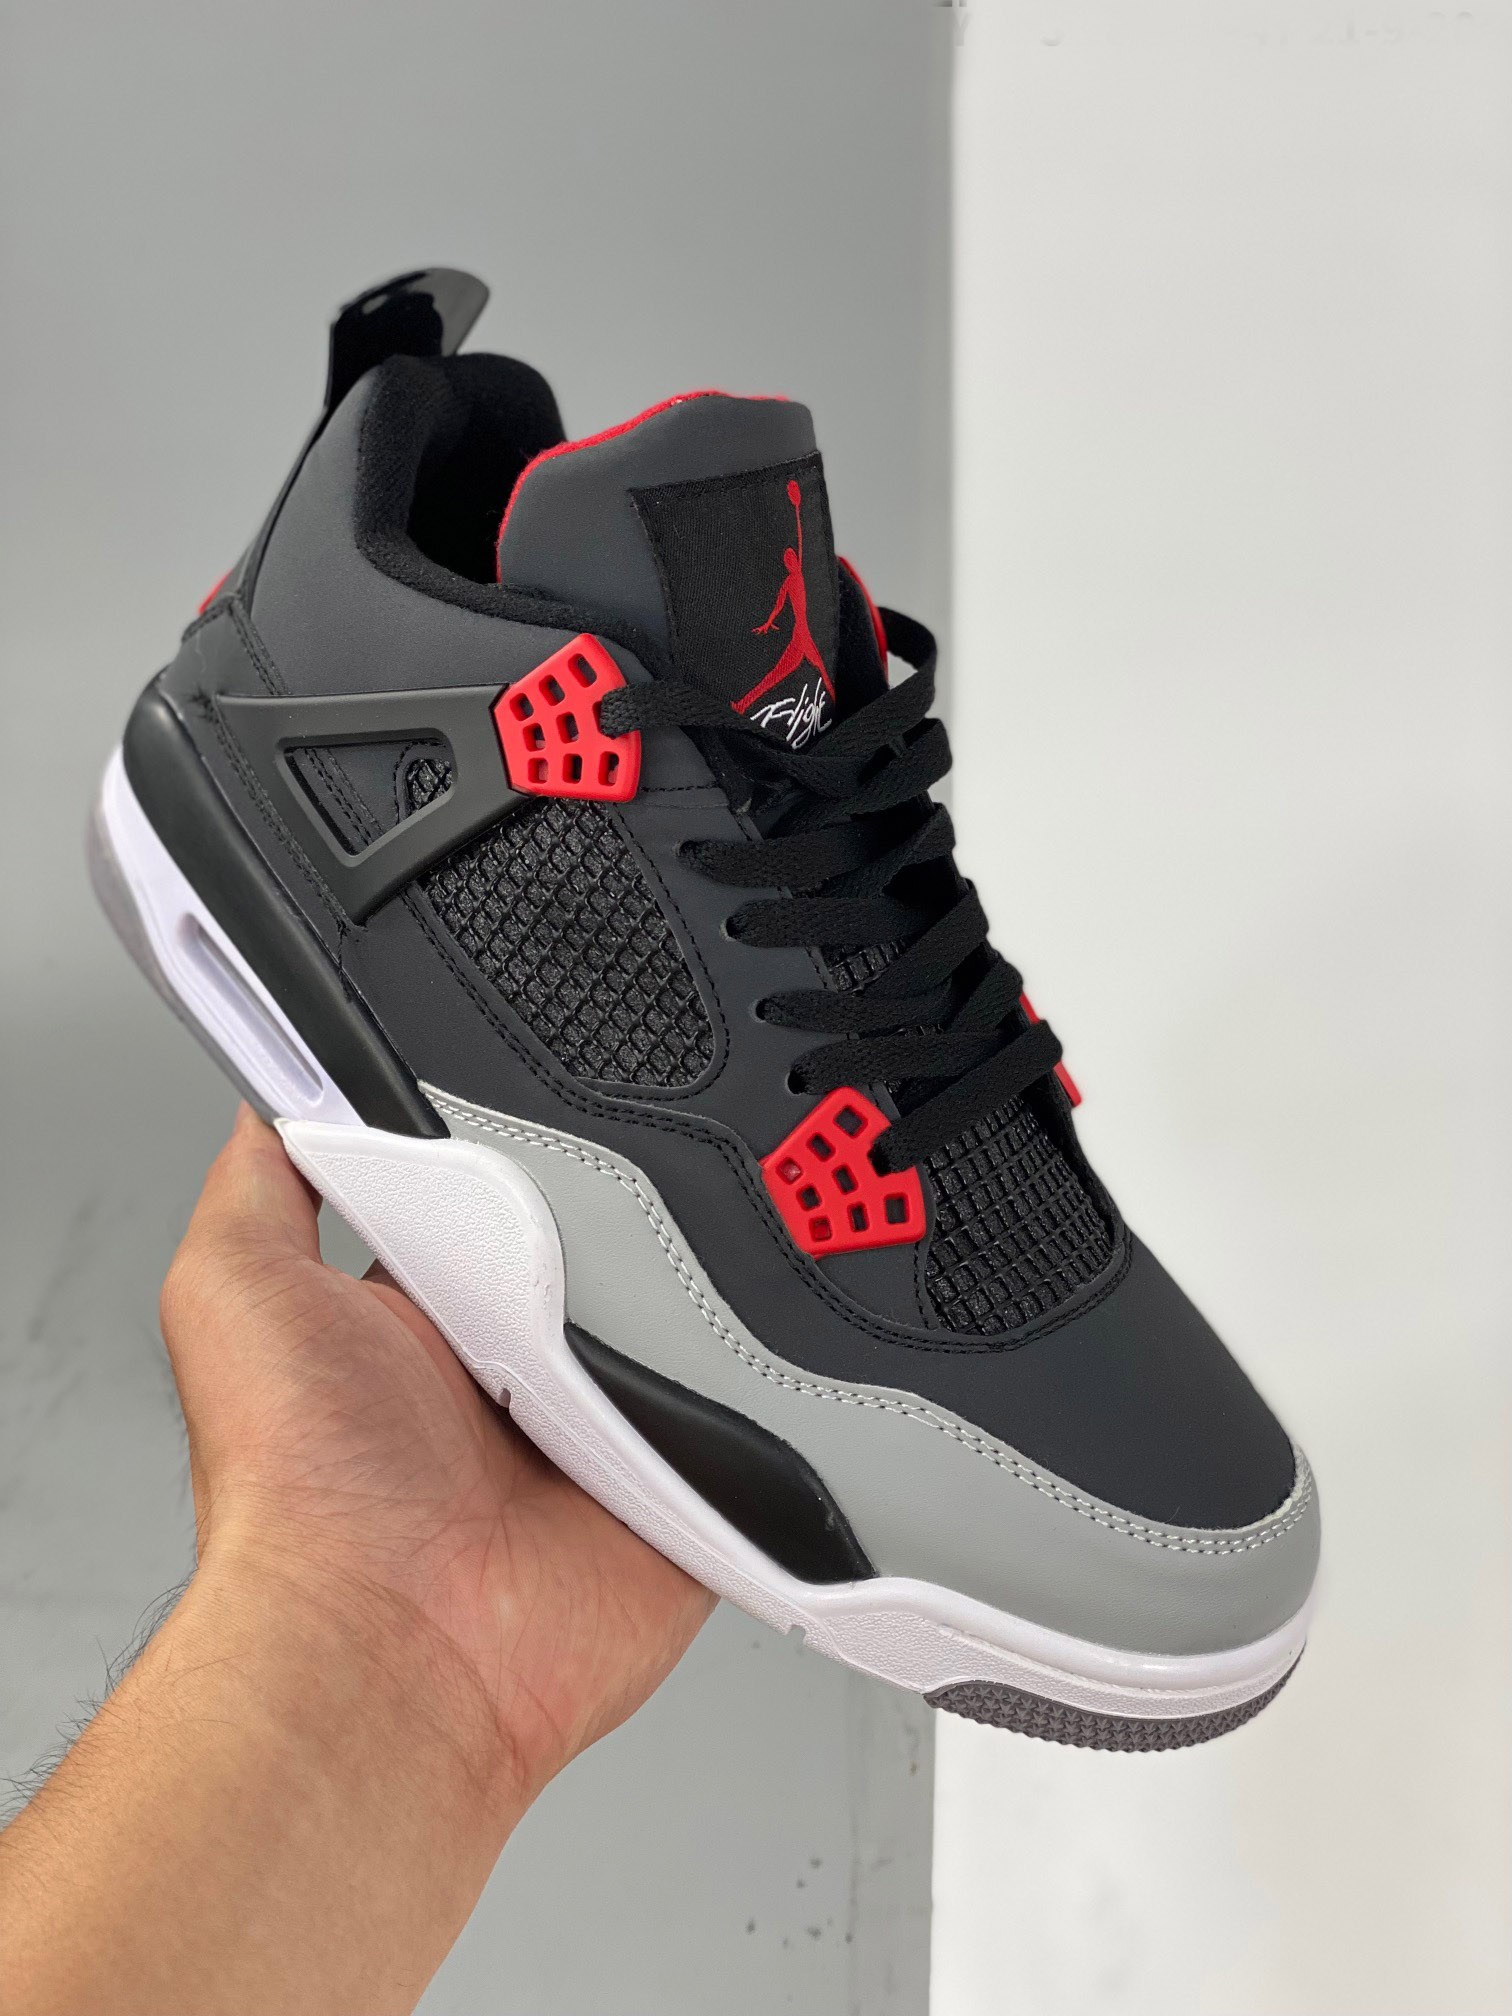 Air Jordan 4 “Infrared” Dark Grey/Infrared 23-Black-Cement Grey Sale – Sneaker Hello